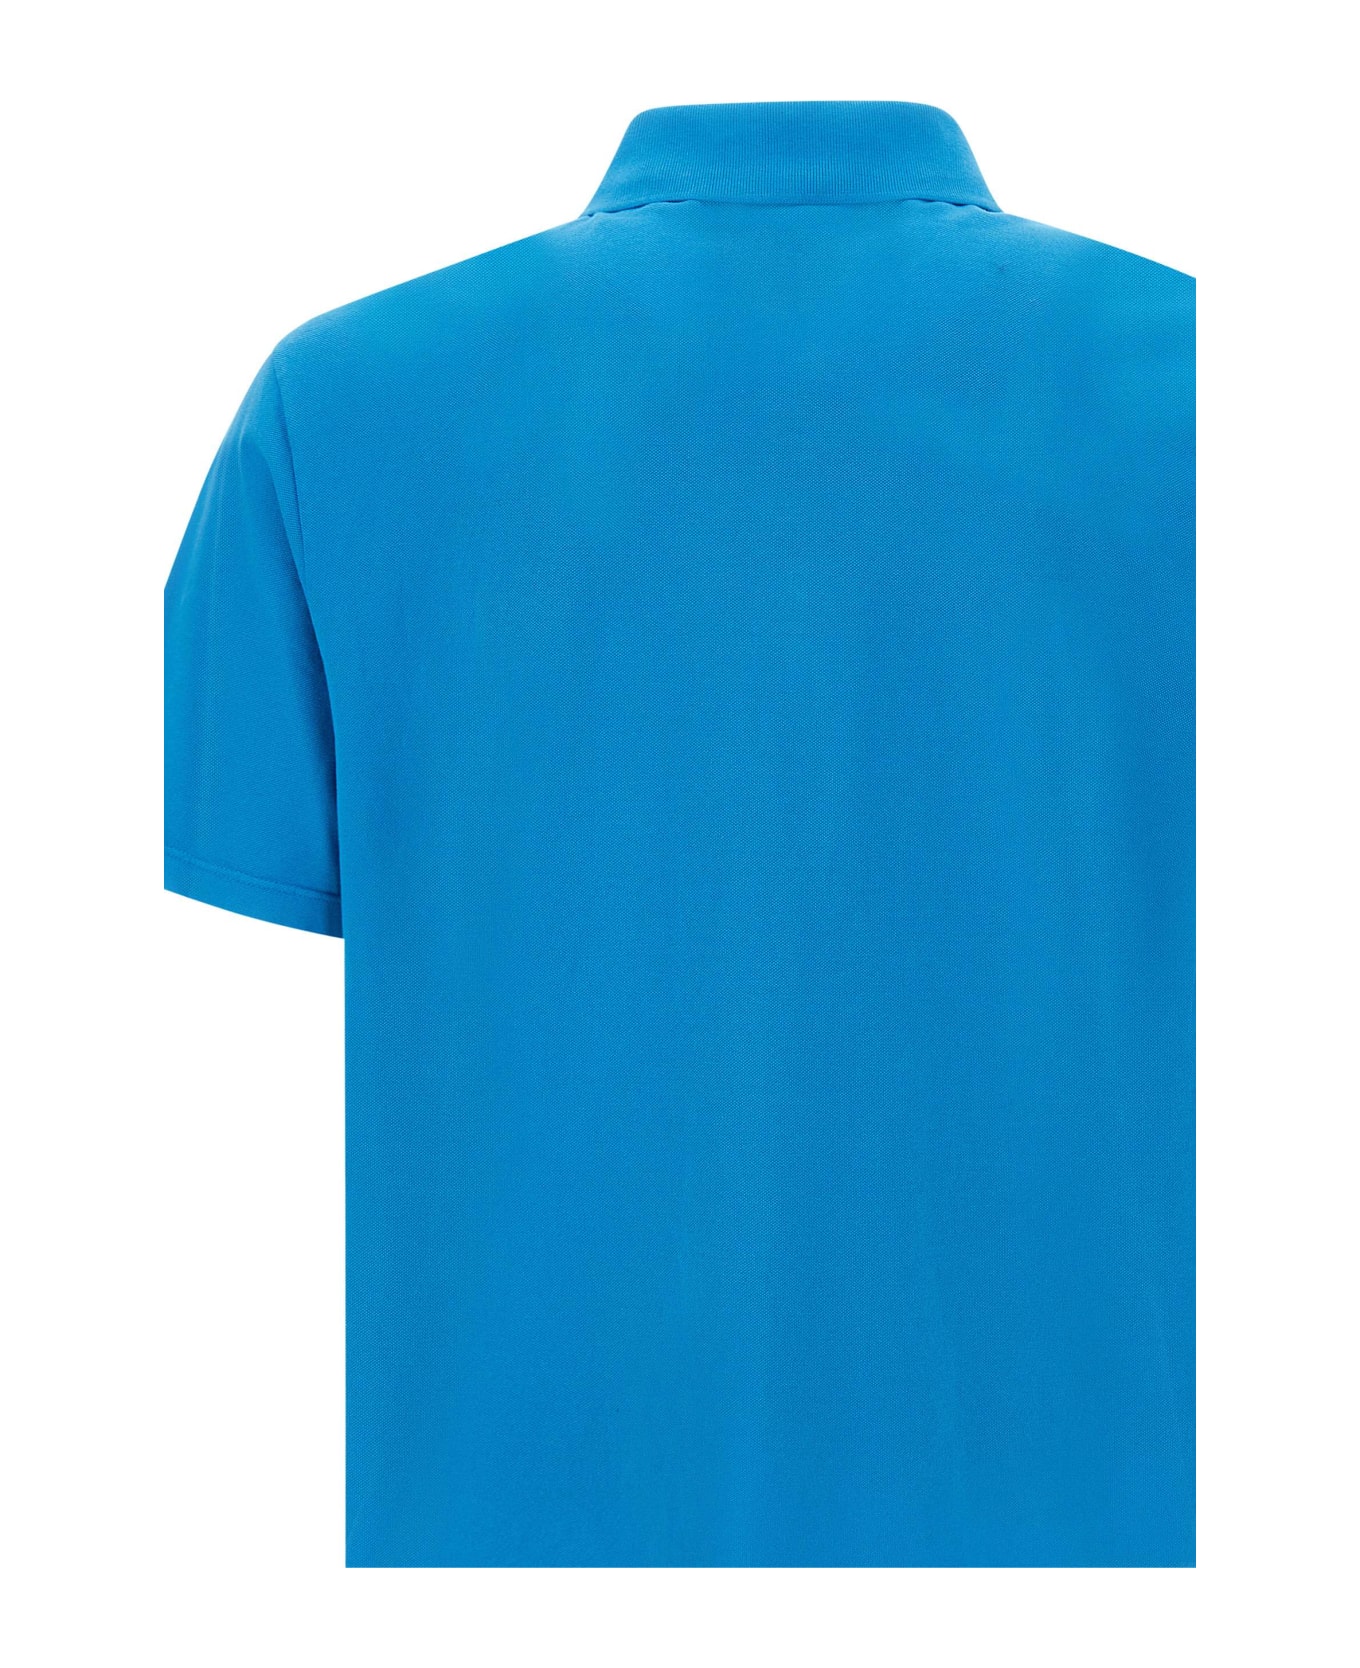 Paul&Shark Cotton Polo Shirt - BLUE ポロシャツ